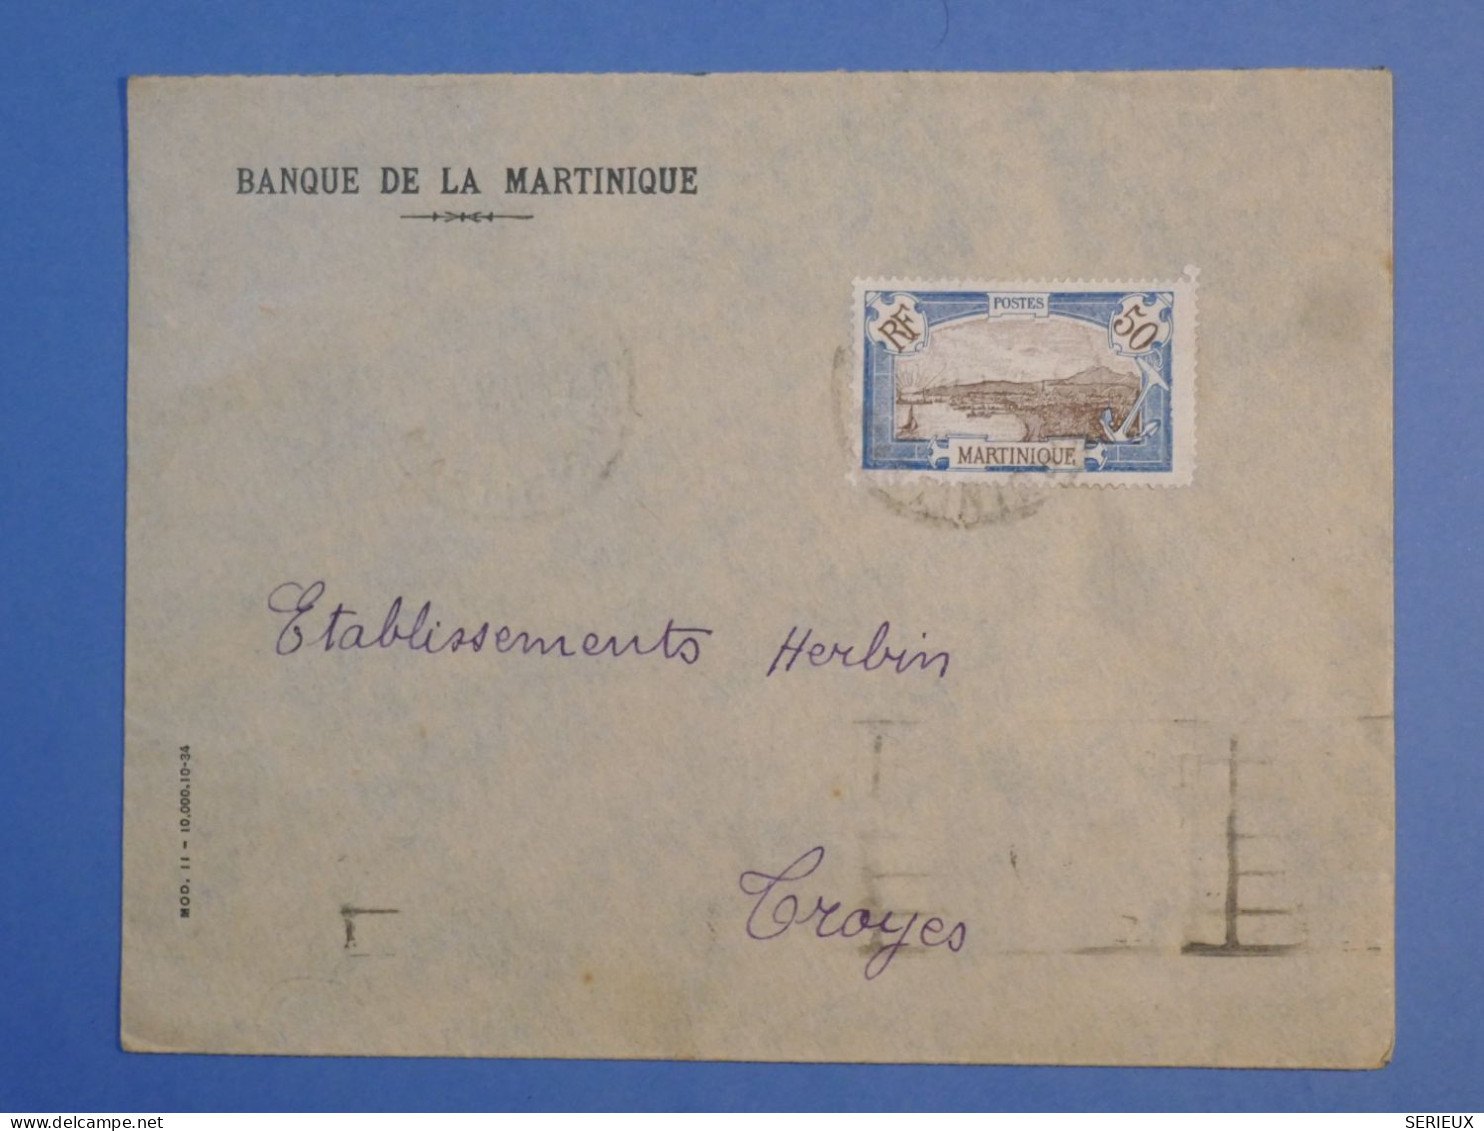 DK 12 MARTINIQUE   BELLE LETTRE    BANQUE 1935 A TROYES  FRANCE ++AFF. INTERESSANT++++ + - Briefe U. Dokumente